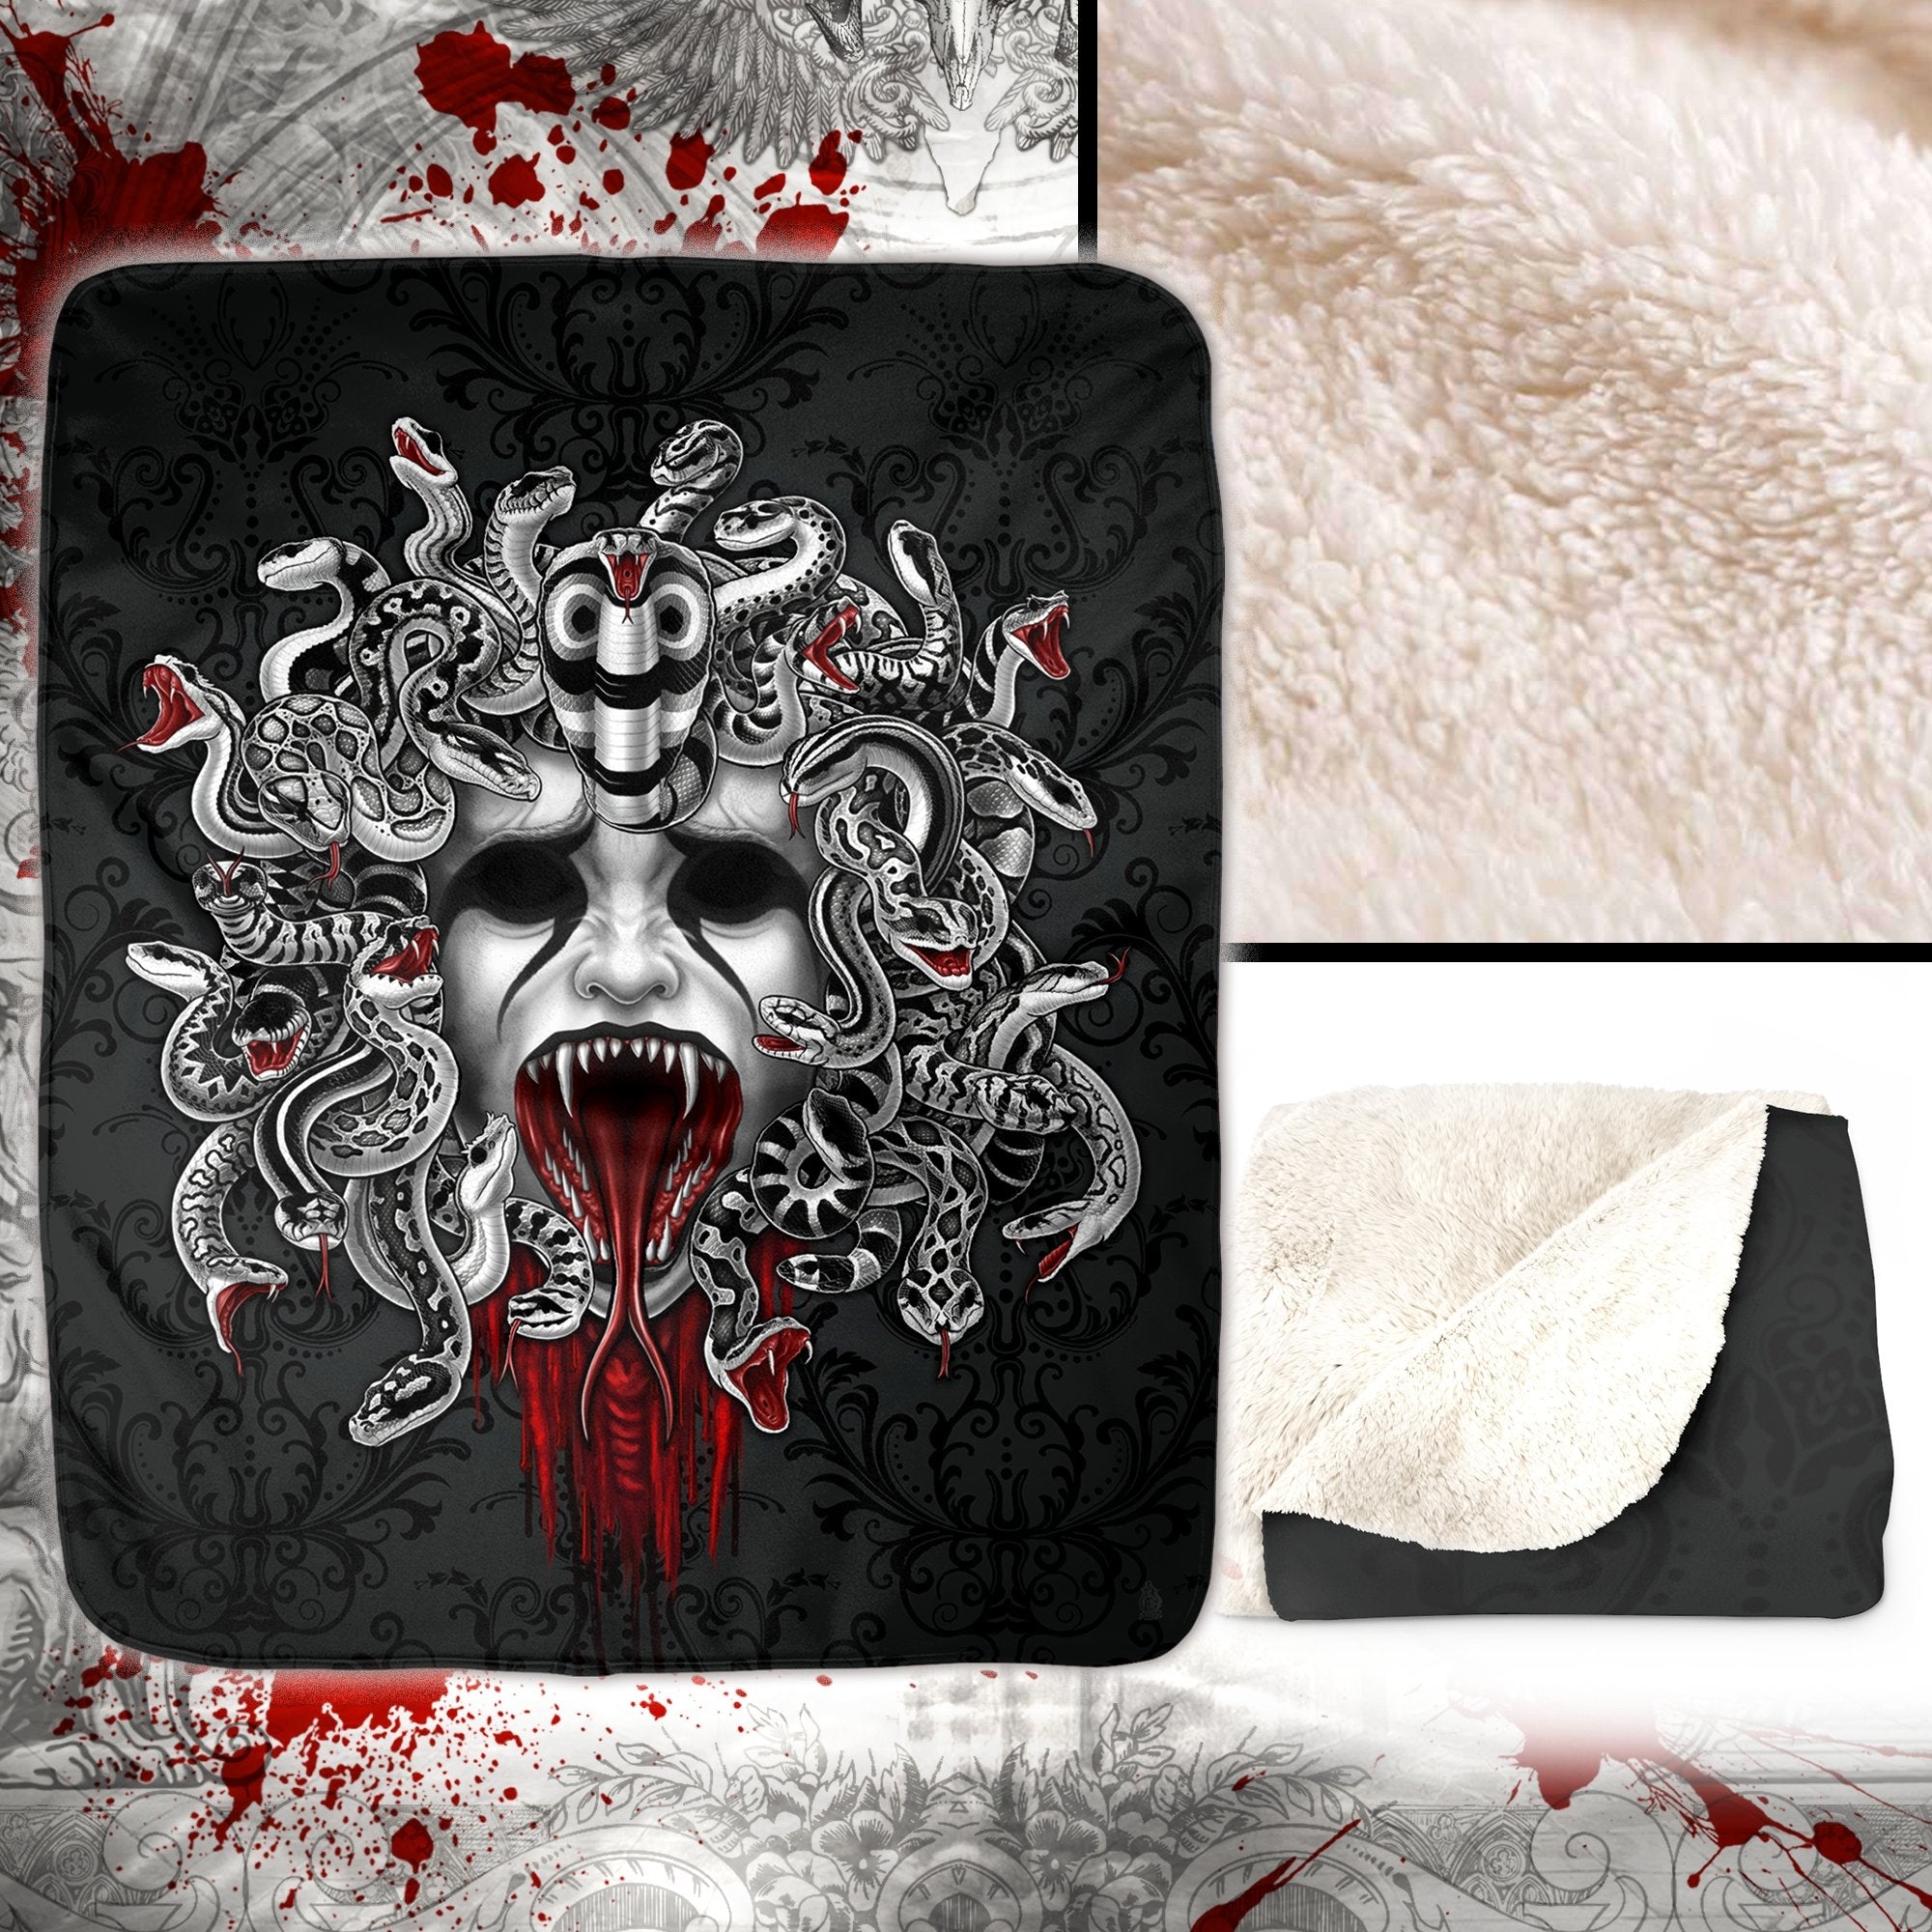 Medusa Throw Fleece Blanket, Nu Goth Home Decor, Alternative Art Gift - Black and White Snakes - Abysm Internal